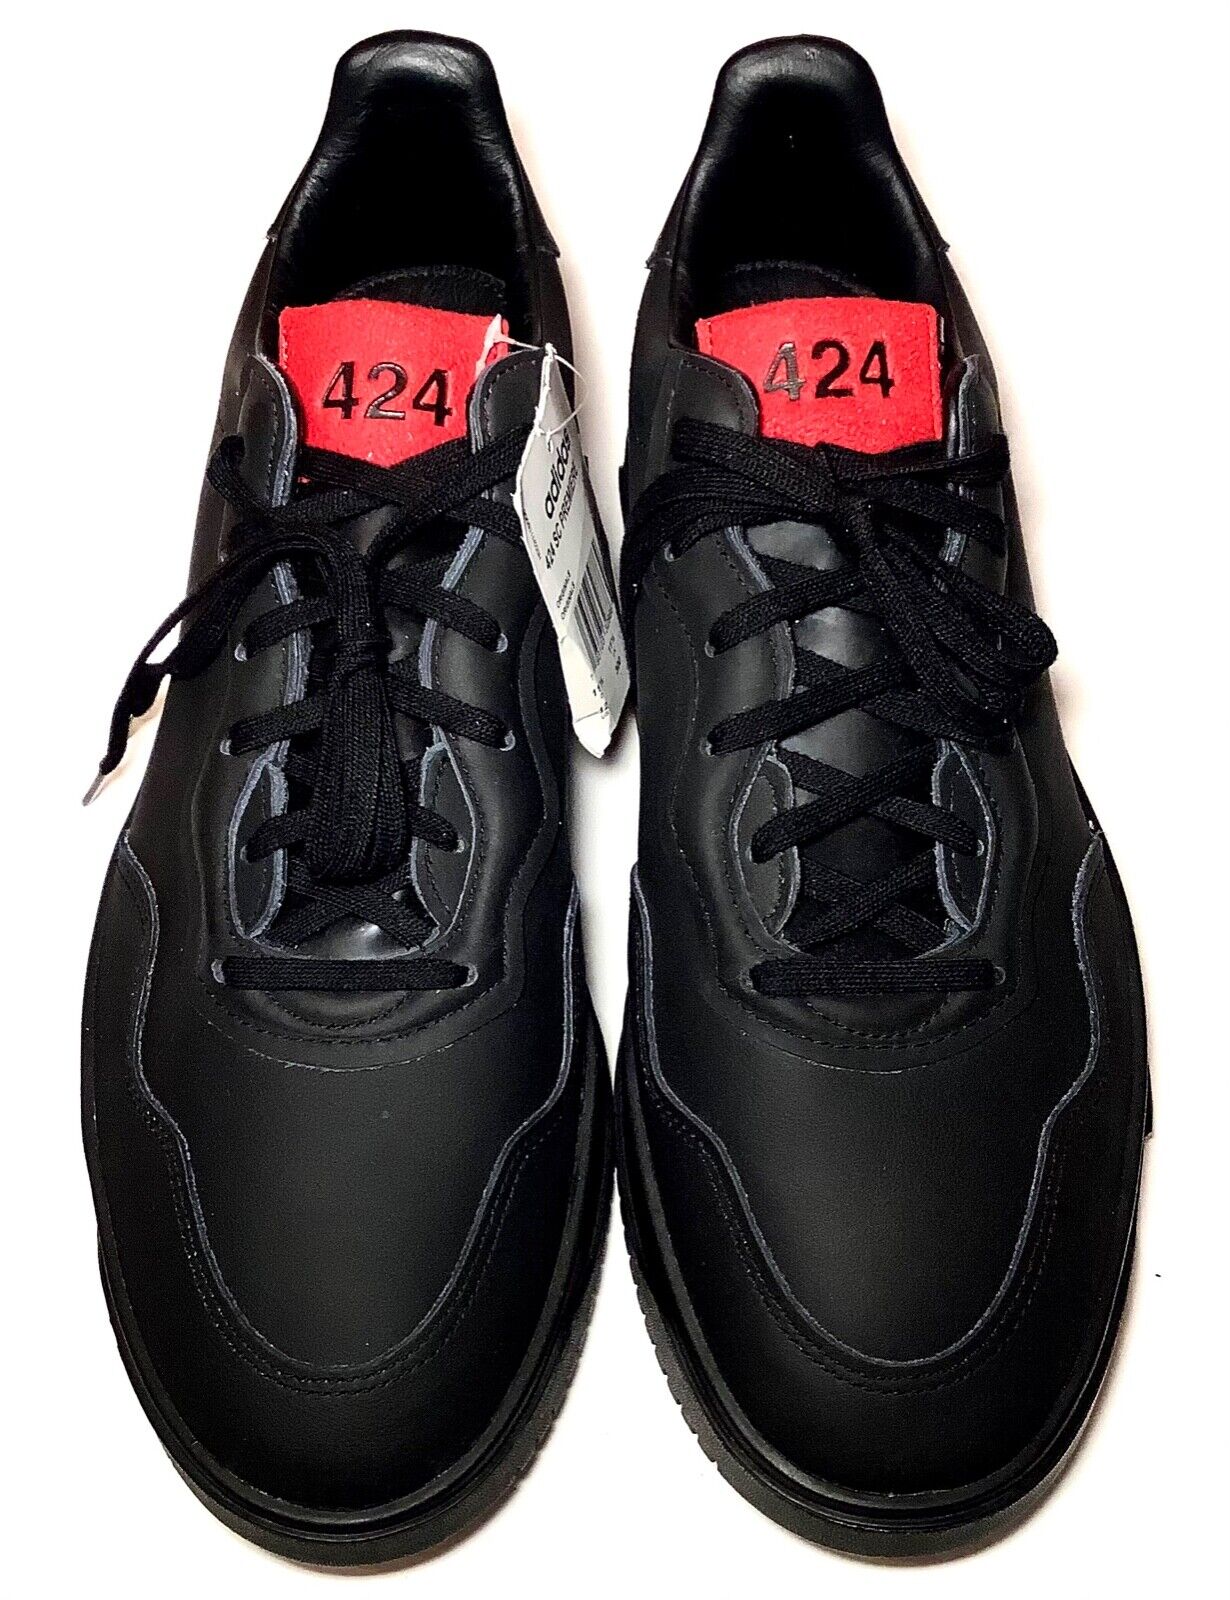 12 adidas Premiere x 424 Black 2019 for sale online | eBay